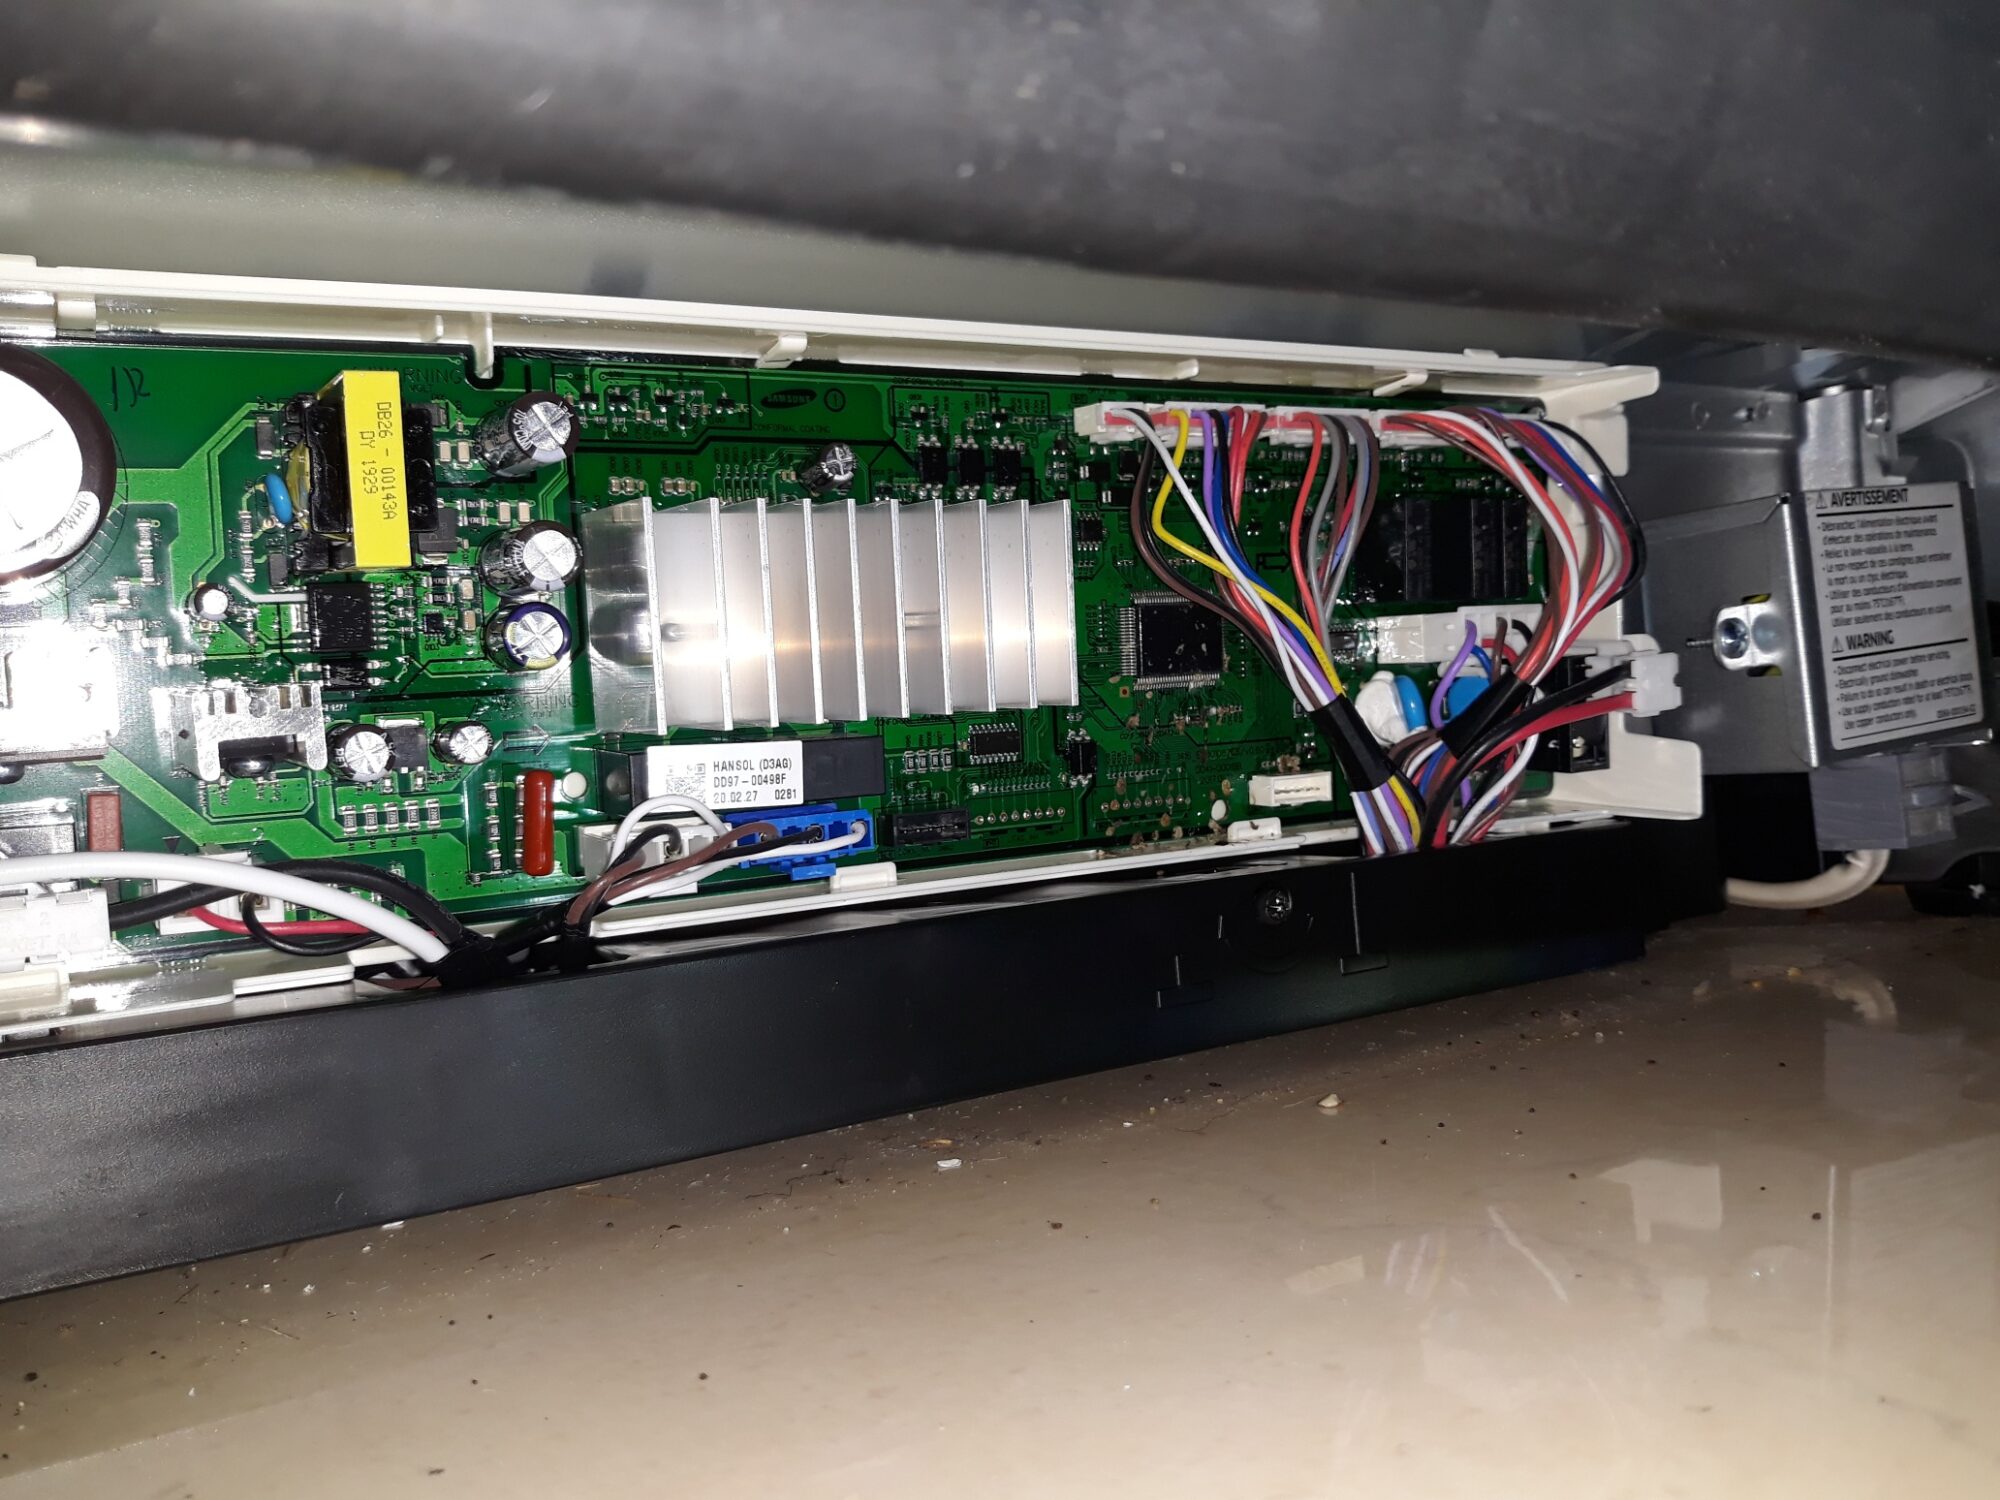 appliance repair refrigerator repair repair require replacement of the main control board that has shorted circuits broad st baldwin fl 32234